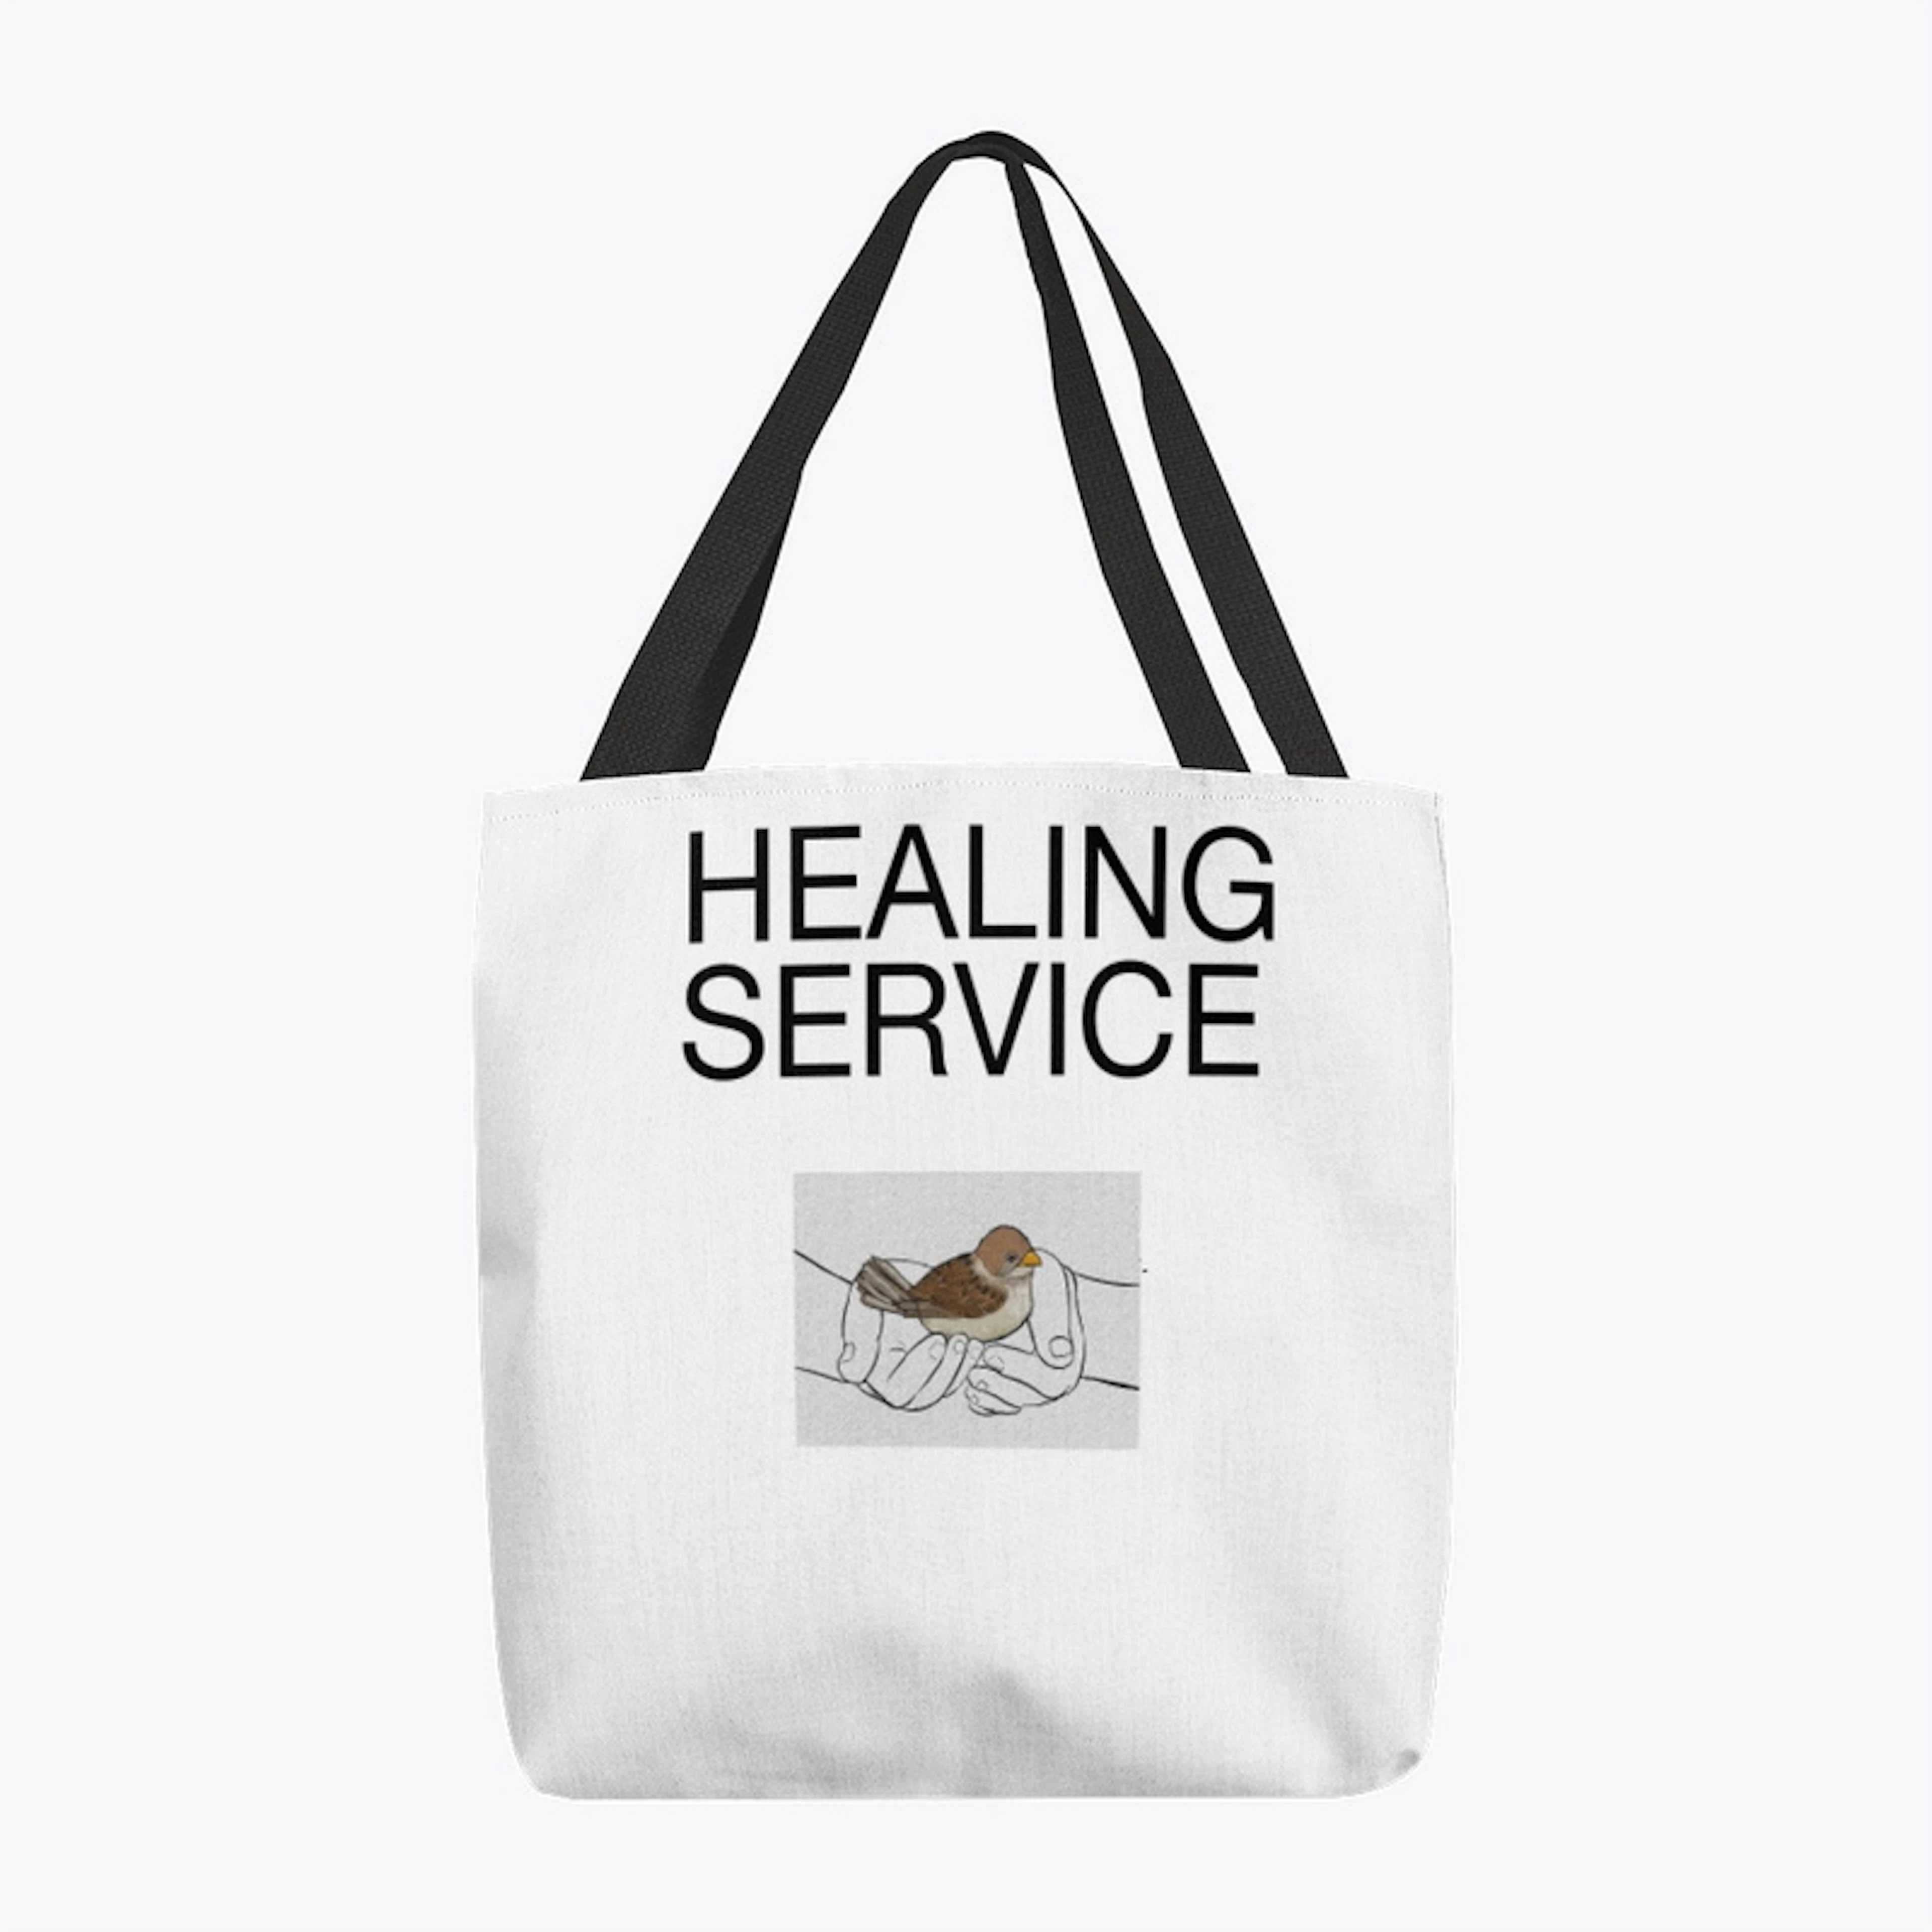 Healing Service sparrow shirt